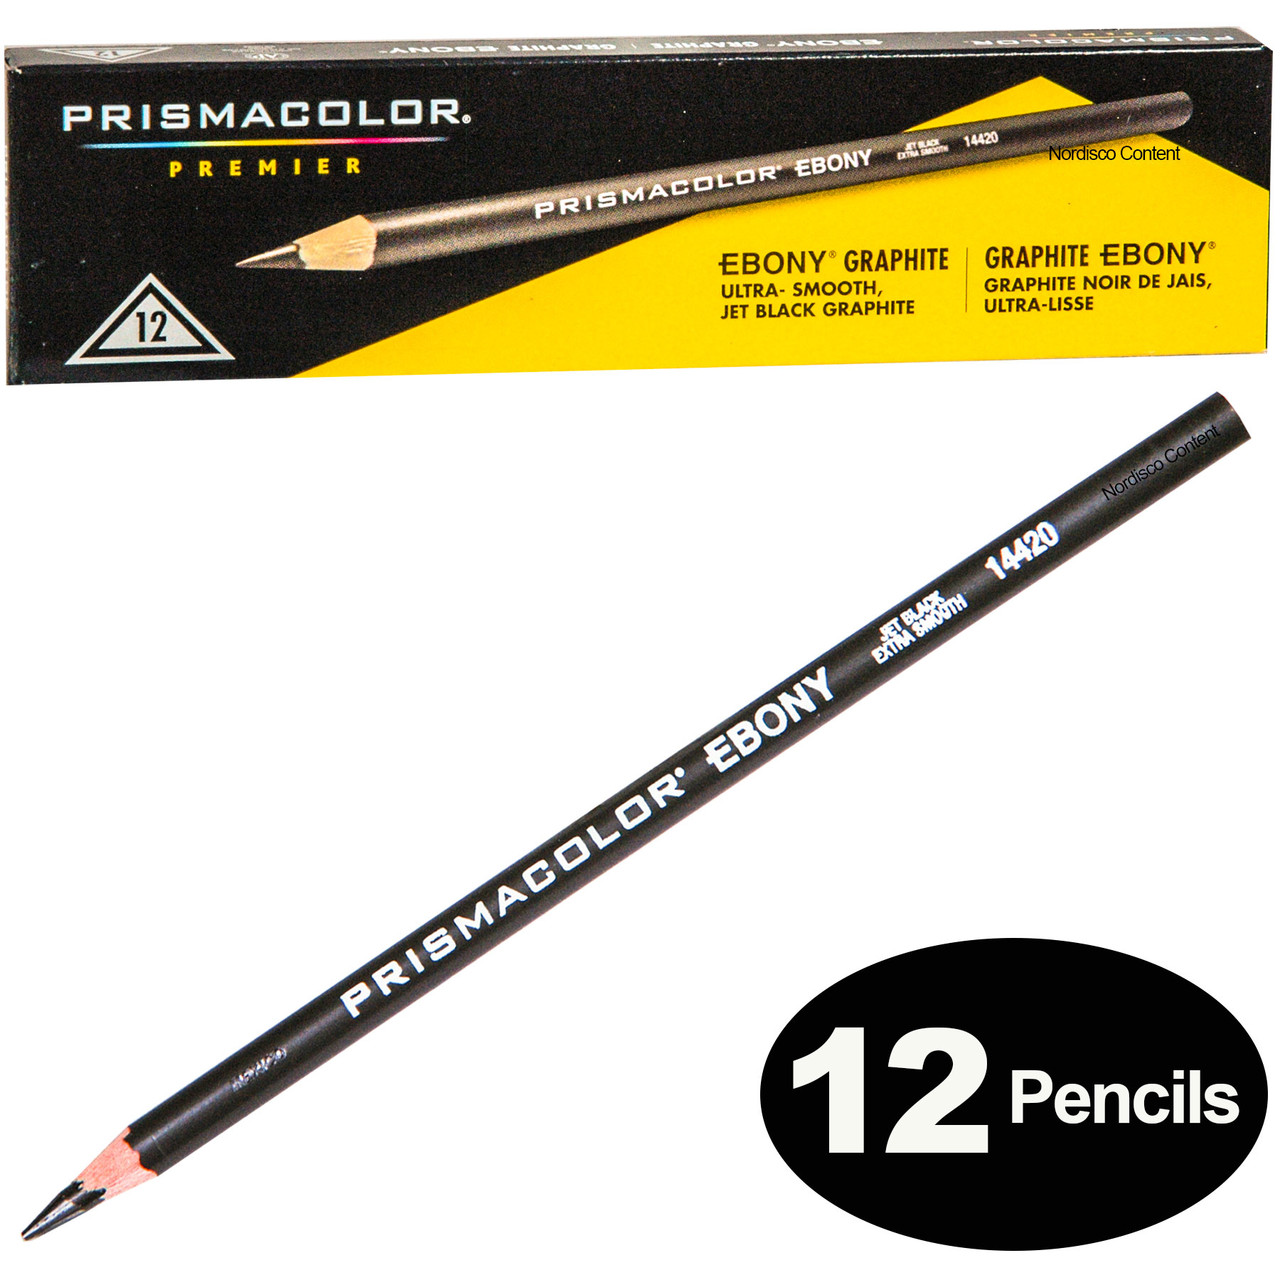  Prismacolor Ebony Pencil - Jet Black